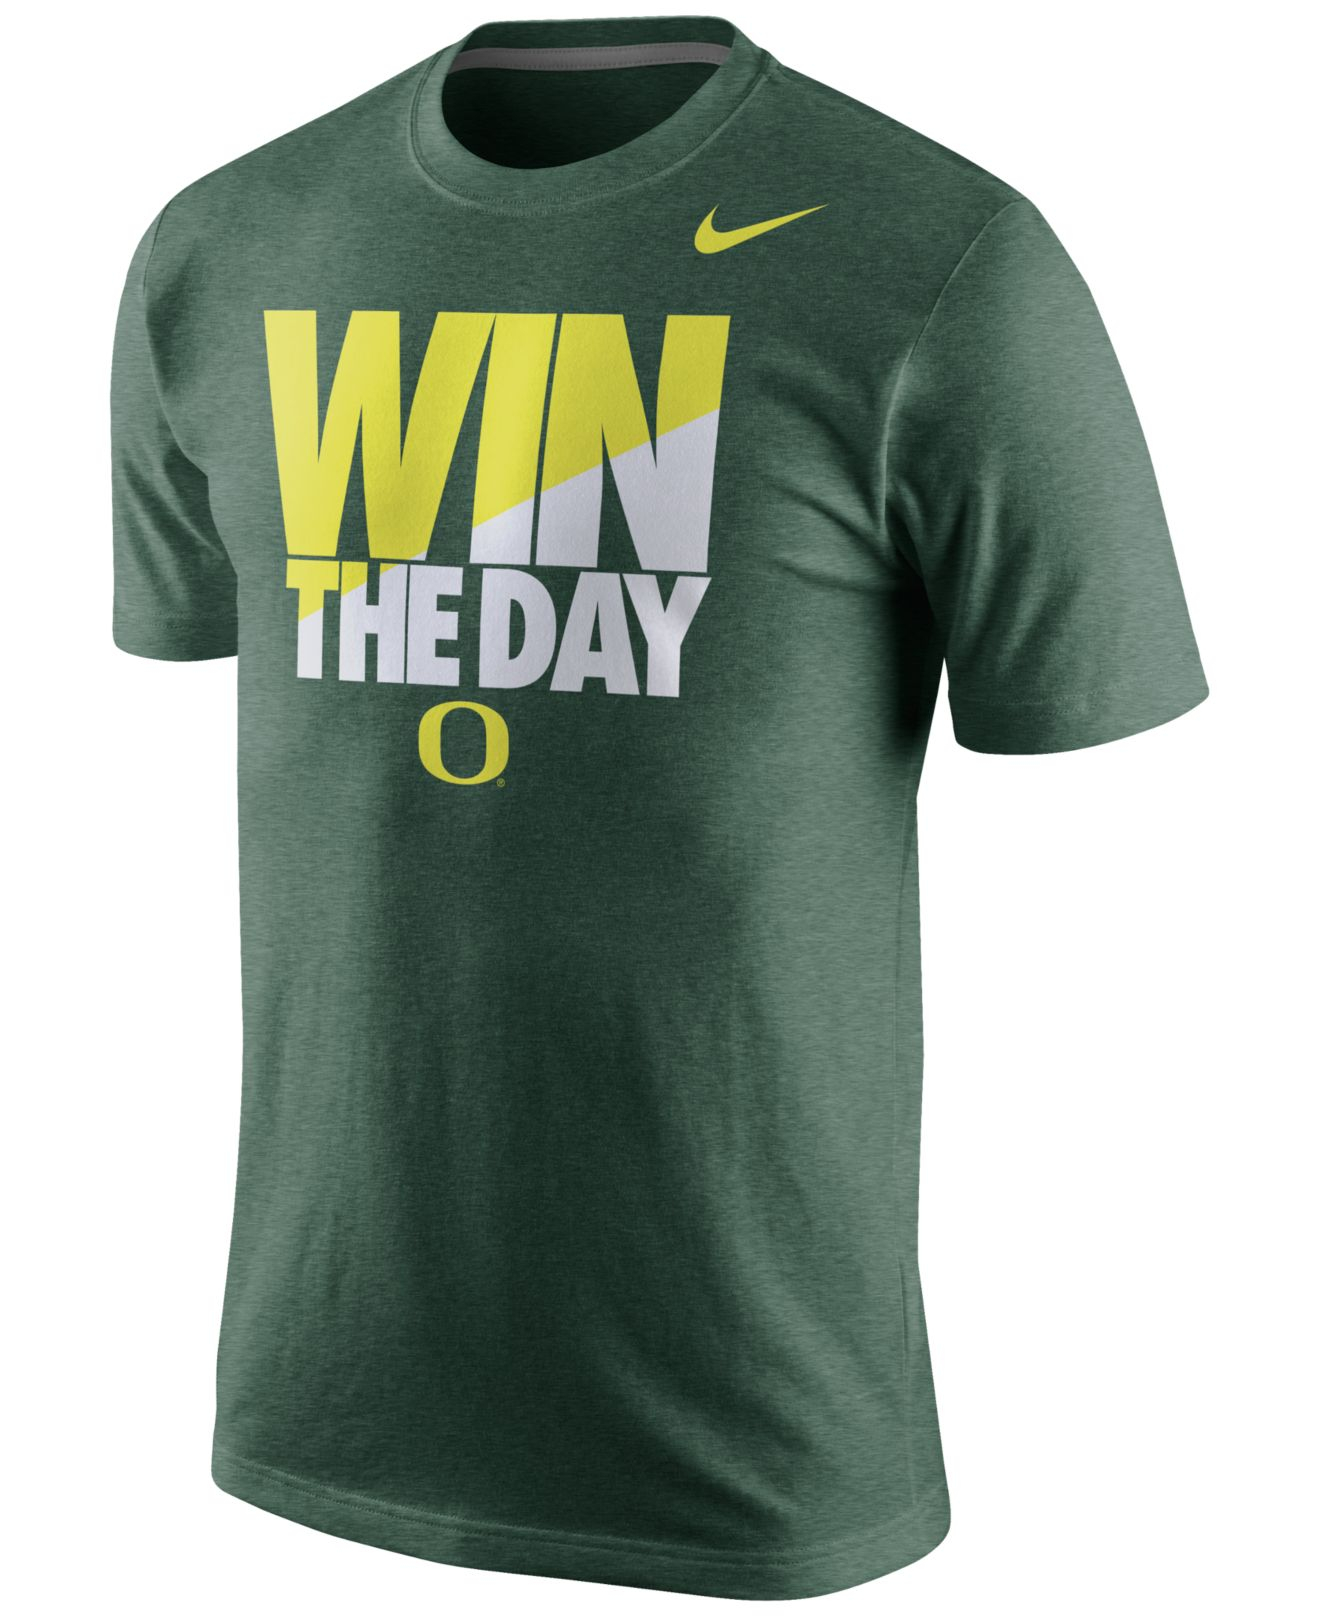 Lyst - Nike Men's Oregon Ducks Local Tri-blend T-shirt in Green for Men